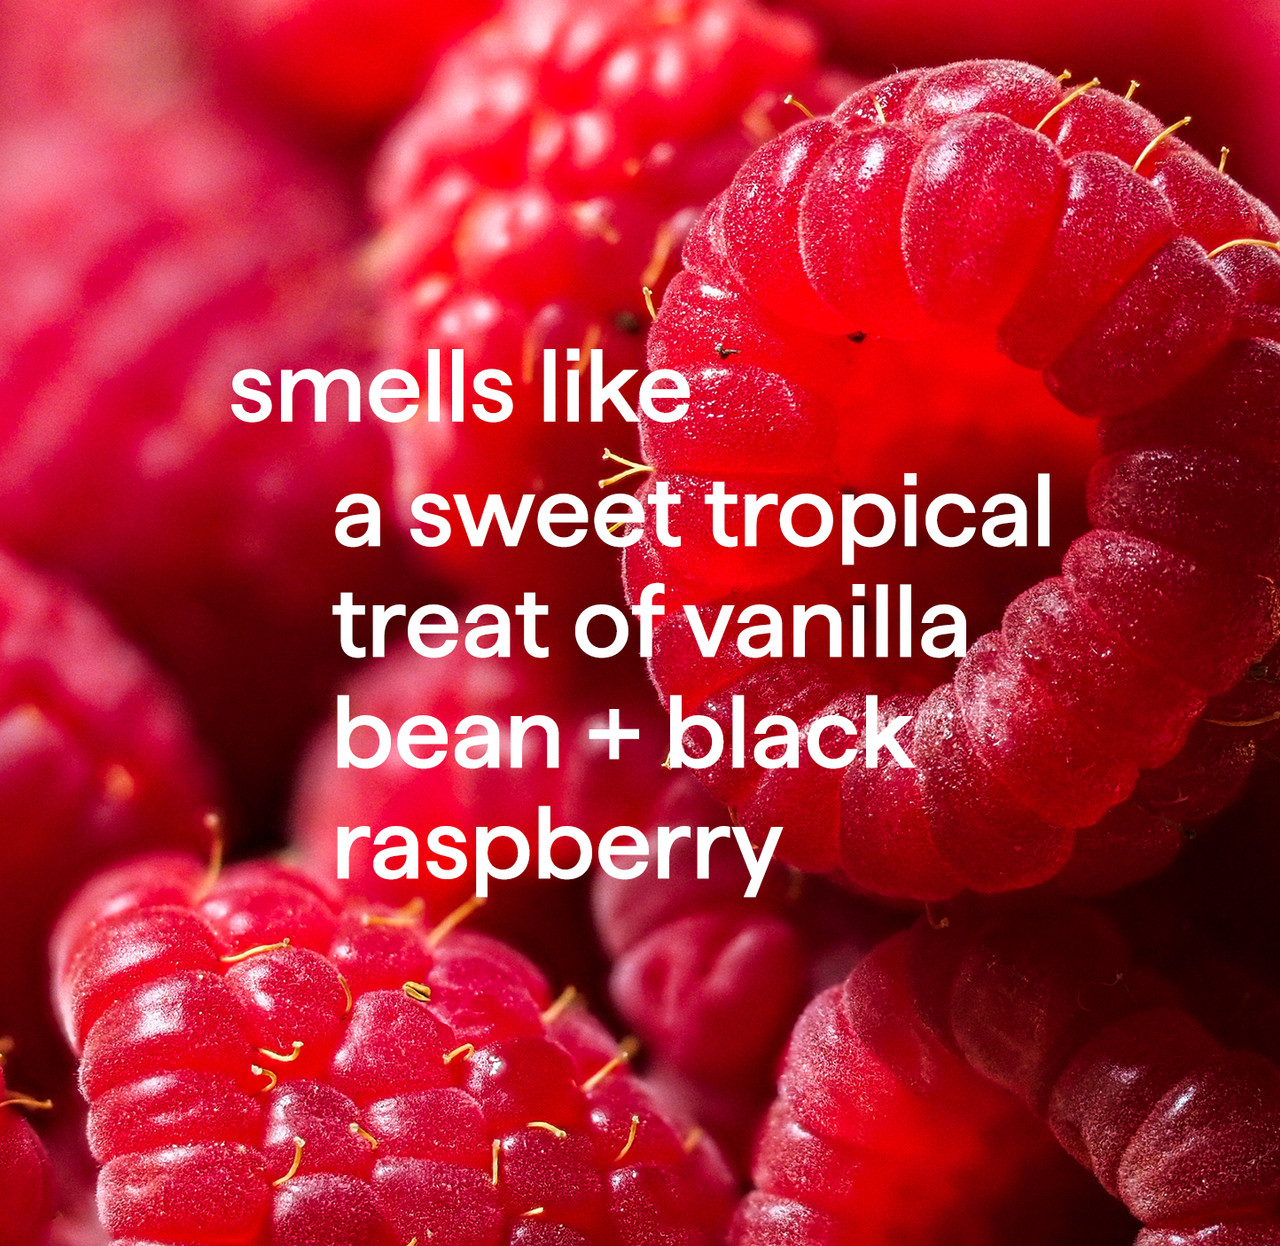 Raspberry Vanilla Diffuser Oil - Shop Online